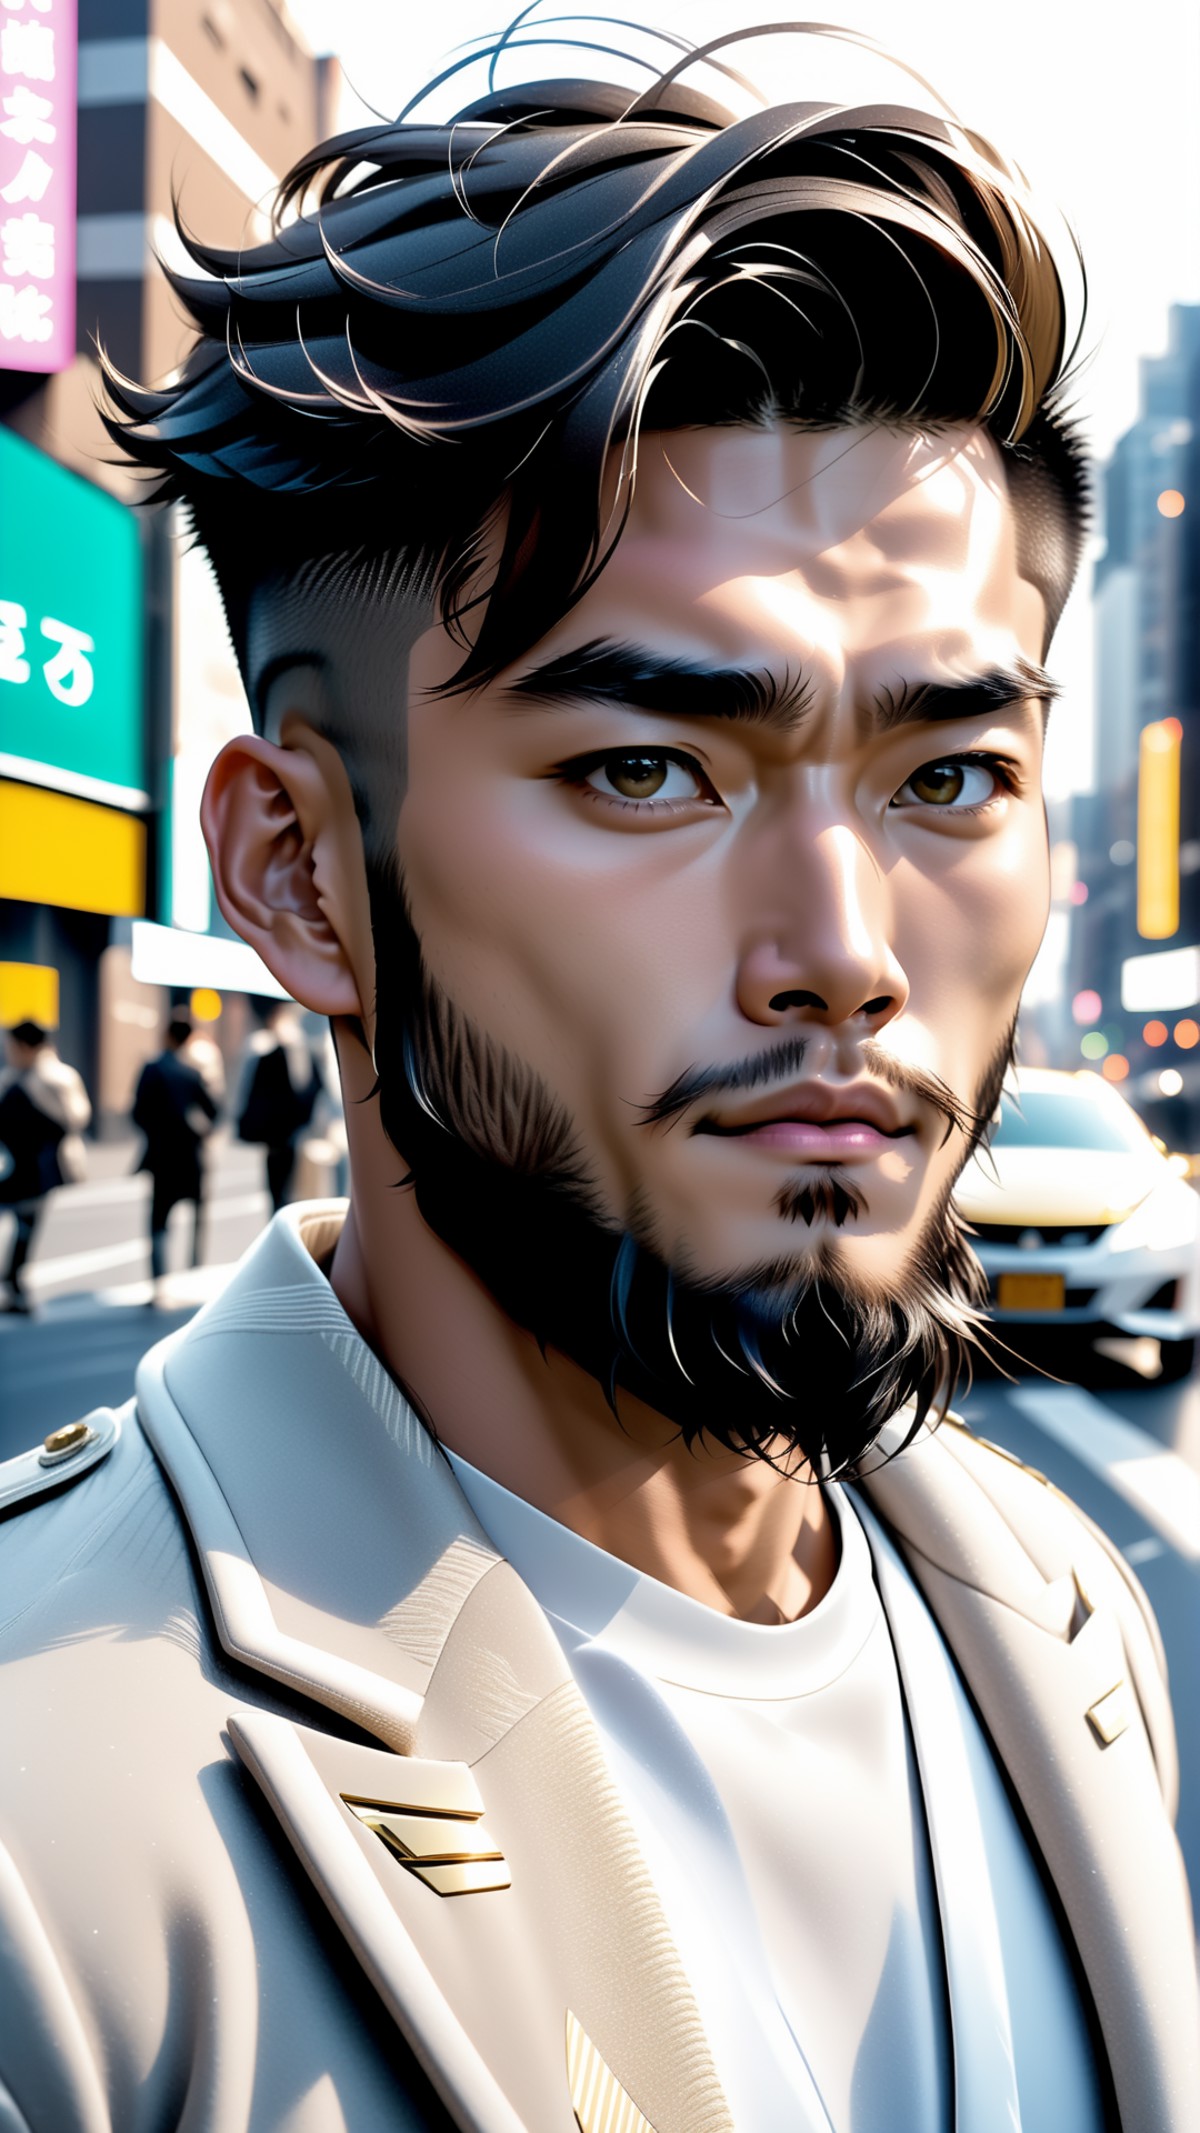 <lora:xl_yamer_style-2.0:1>, analog photo, closeup portrait photo of 24 y.o asian man, natural skin, looks at viewer, city...